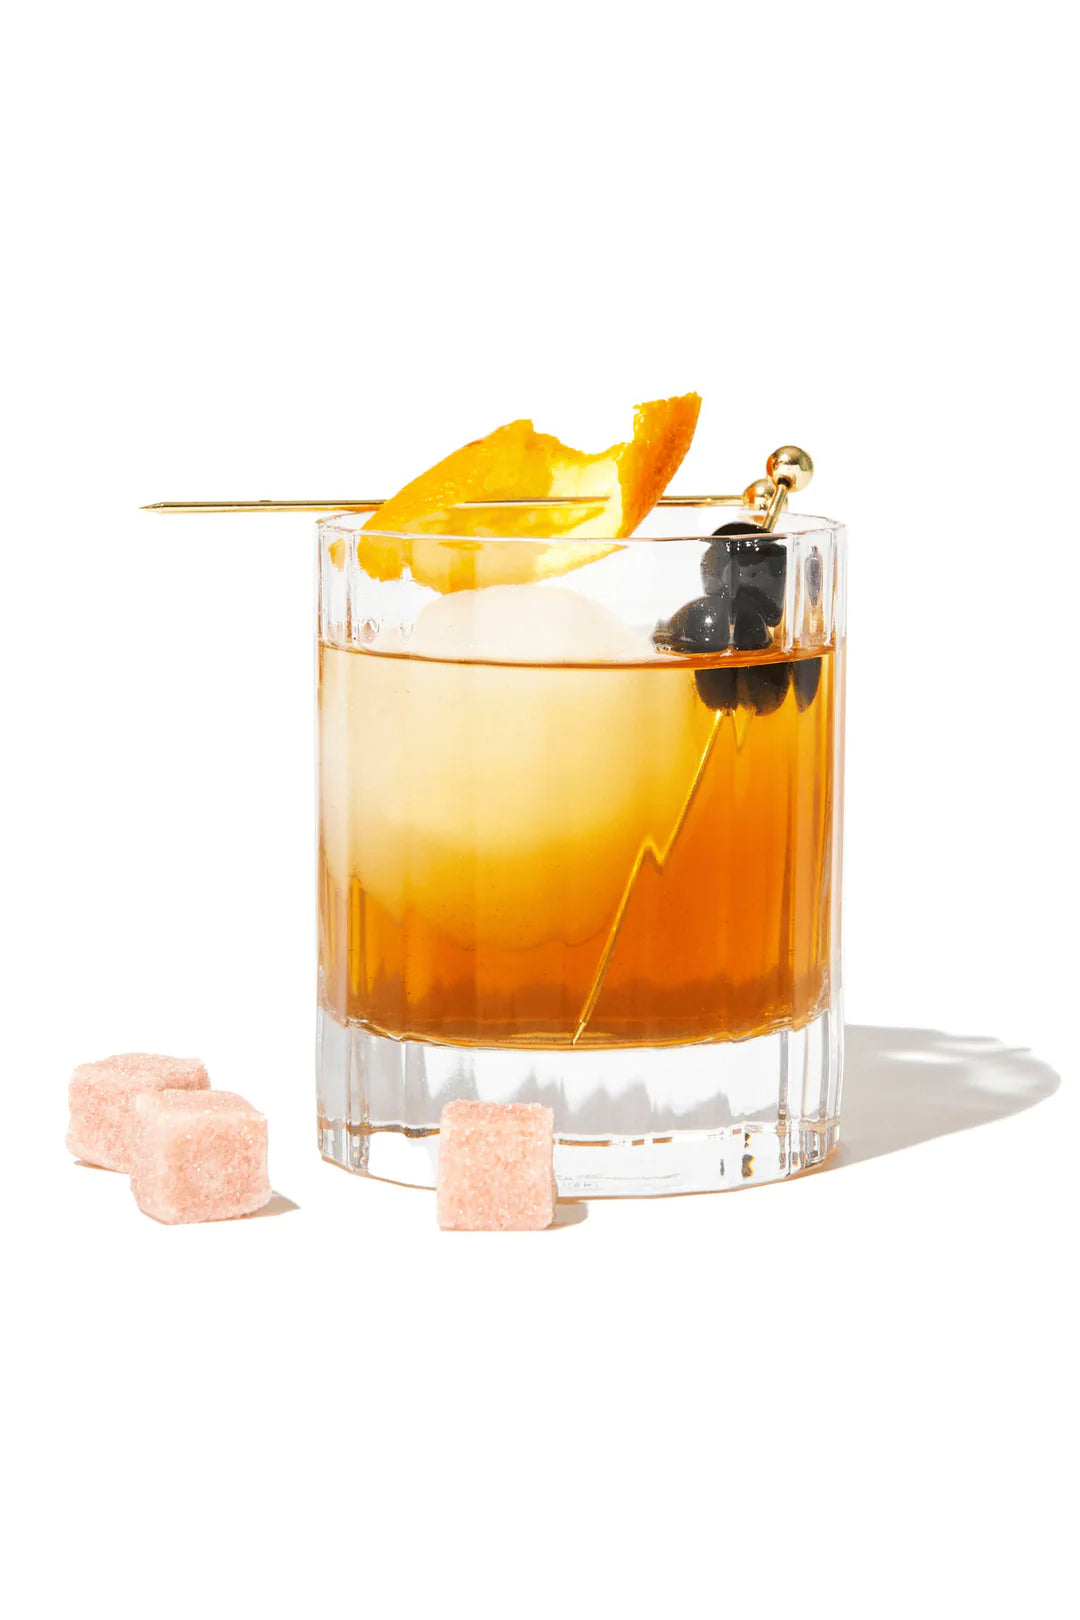 Teaspressa Cocktail Sugar Cube Stick